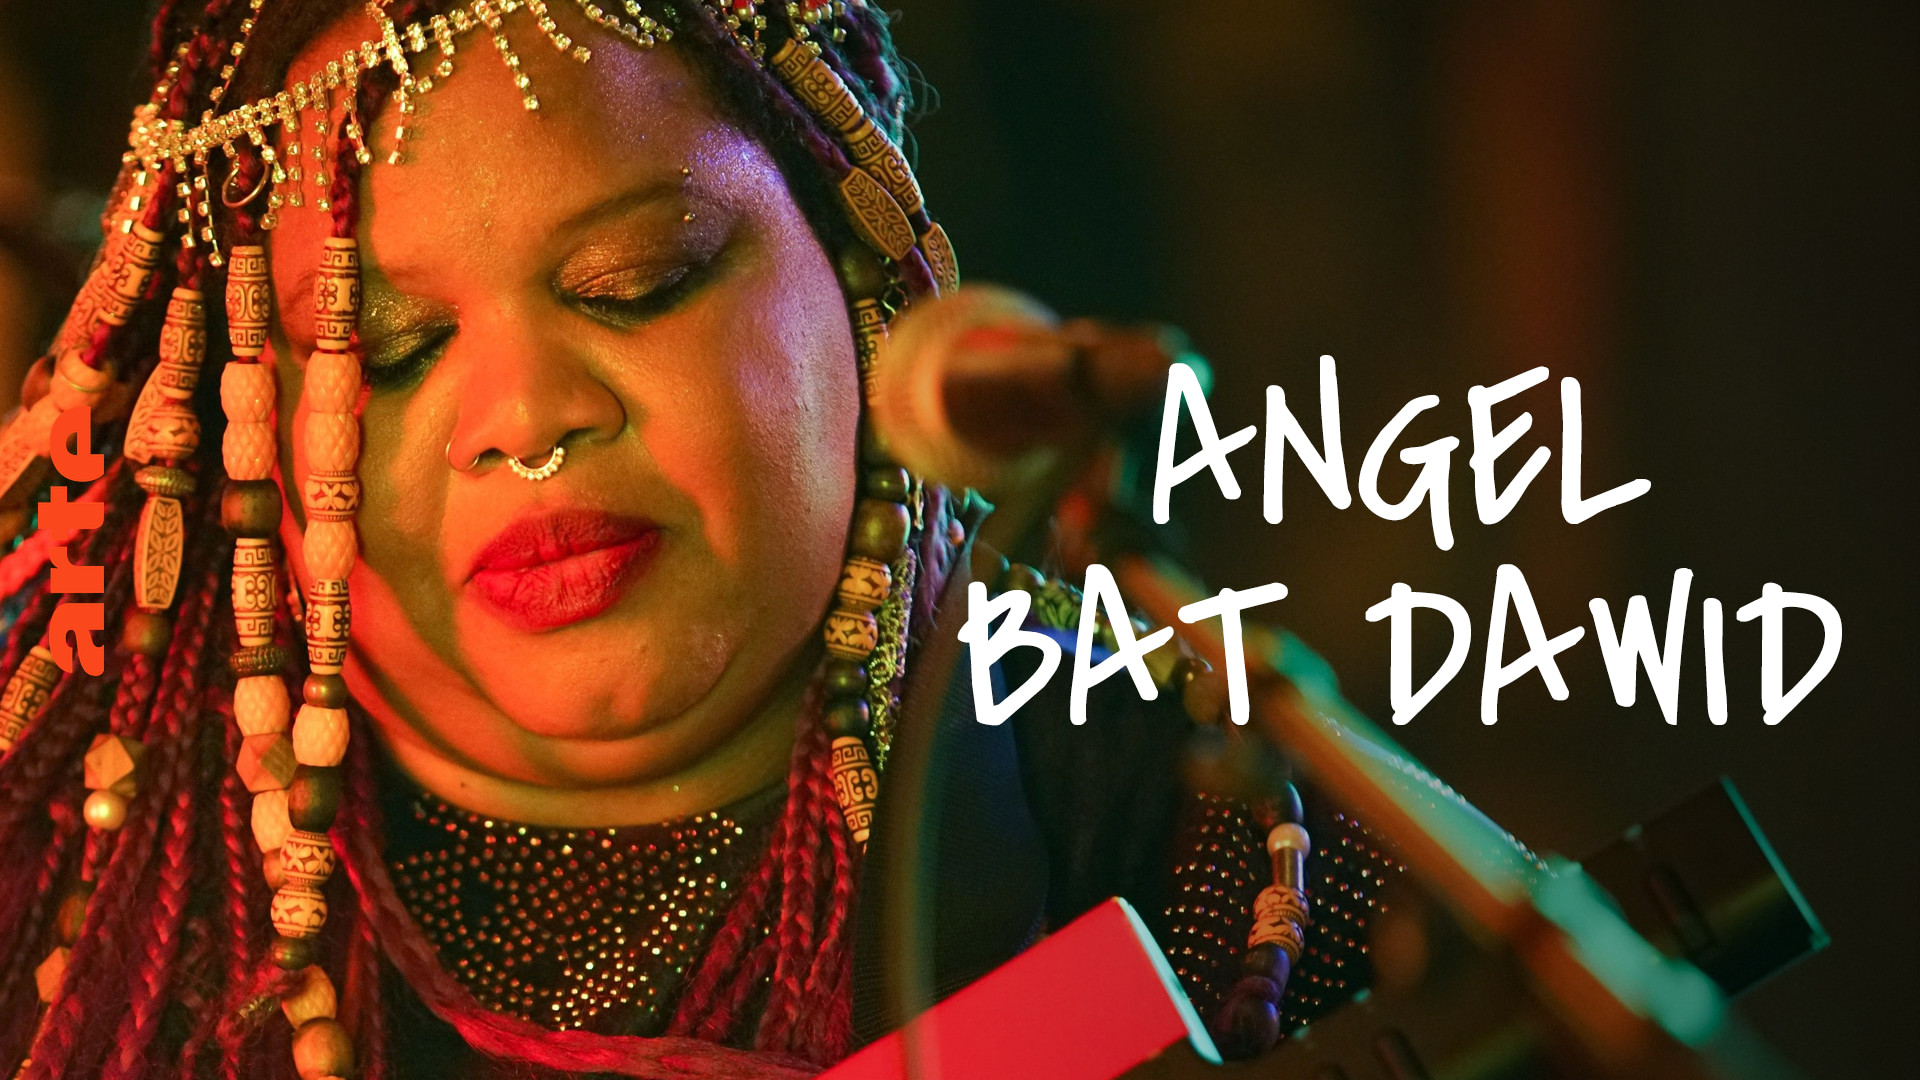 Angel Bat Dawid - Programm in voller Länge | ARTE Concert